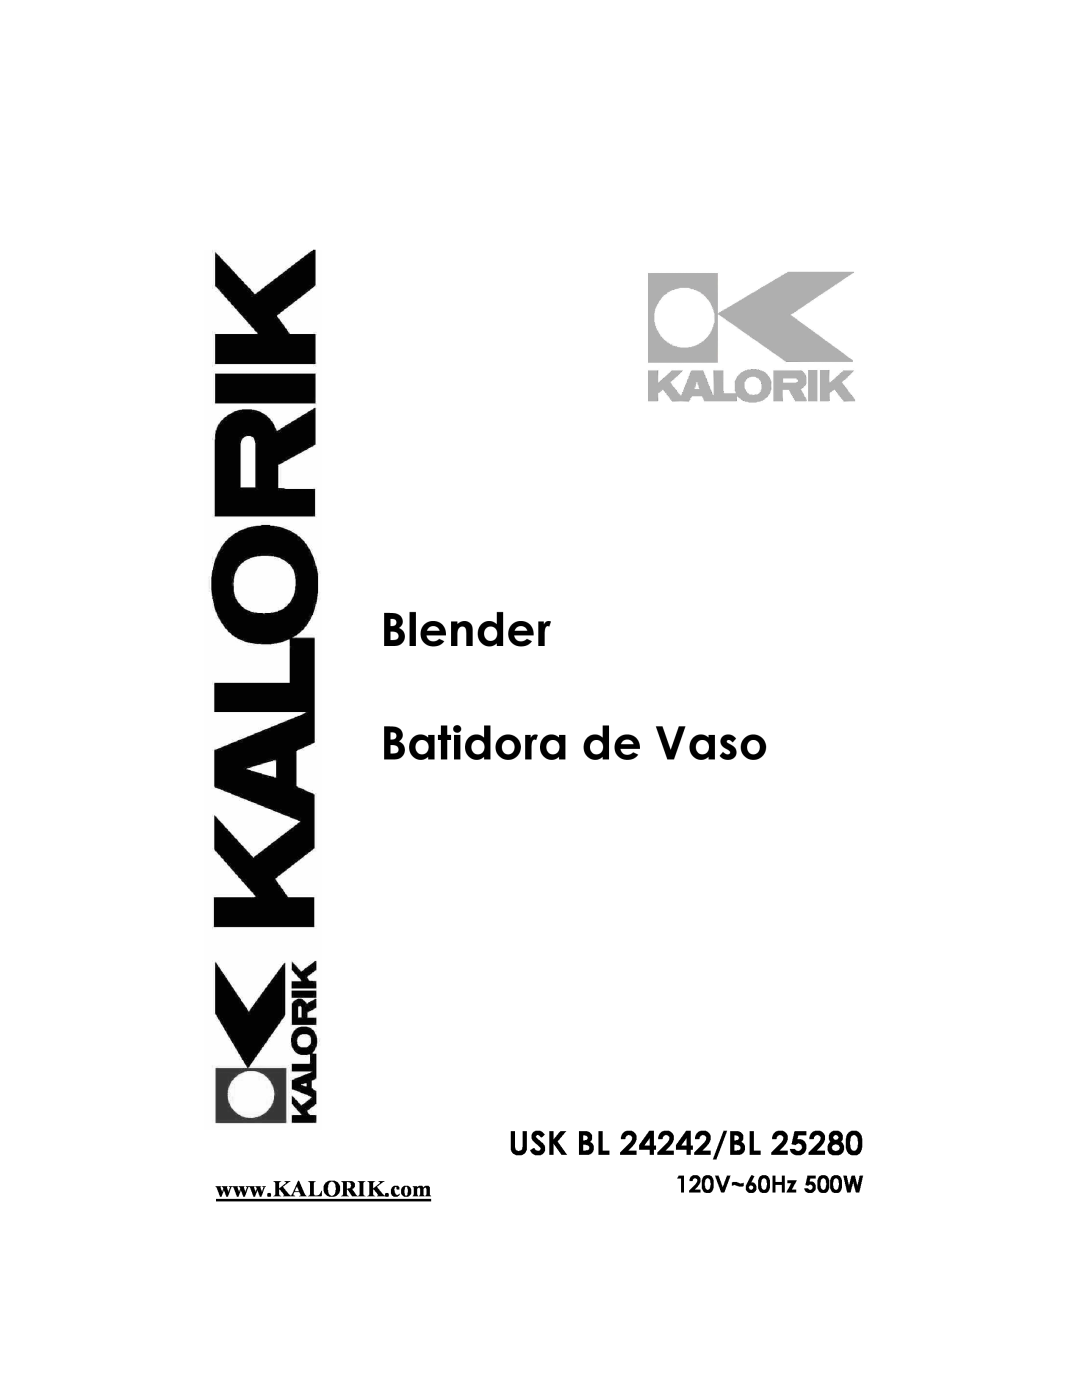 Kalorik BL 25280 manual 120V~60Hz 500W, Blender Batidora de Vaso, USK BL 24242/BL 